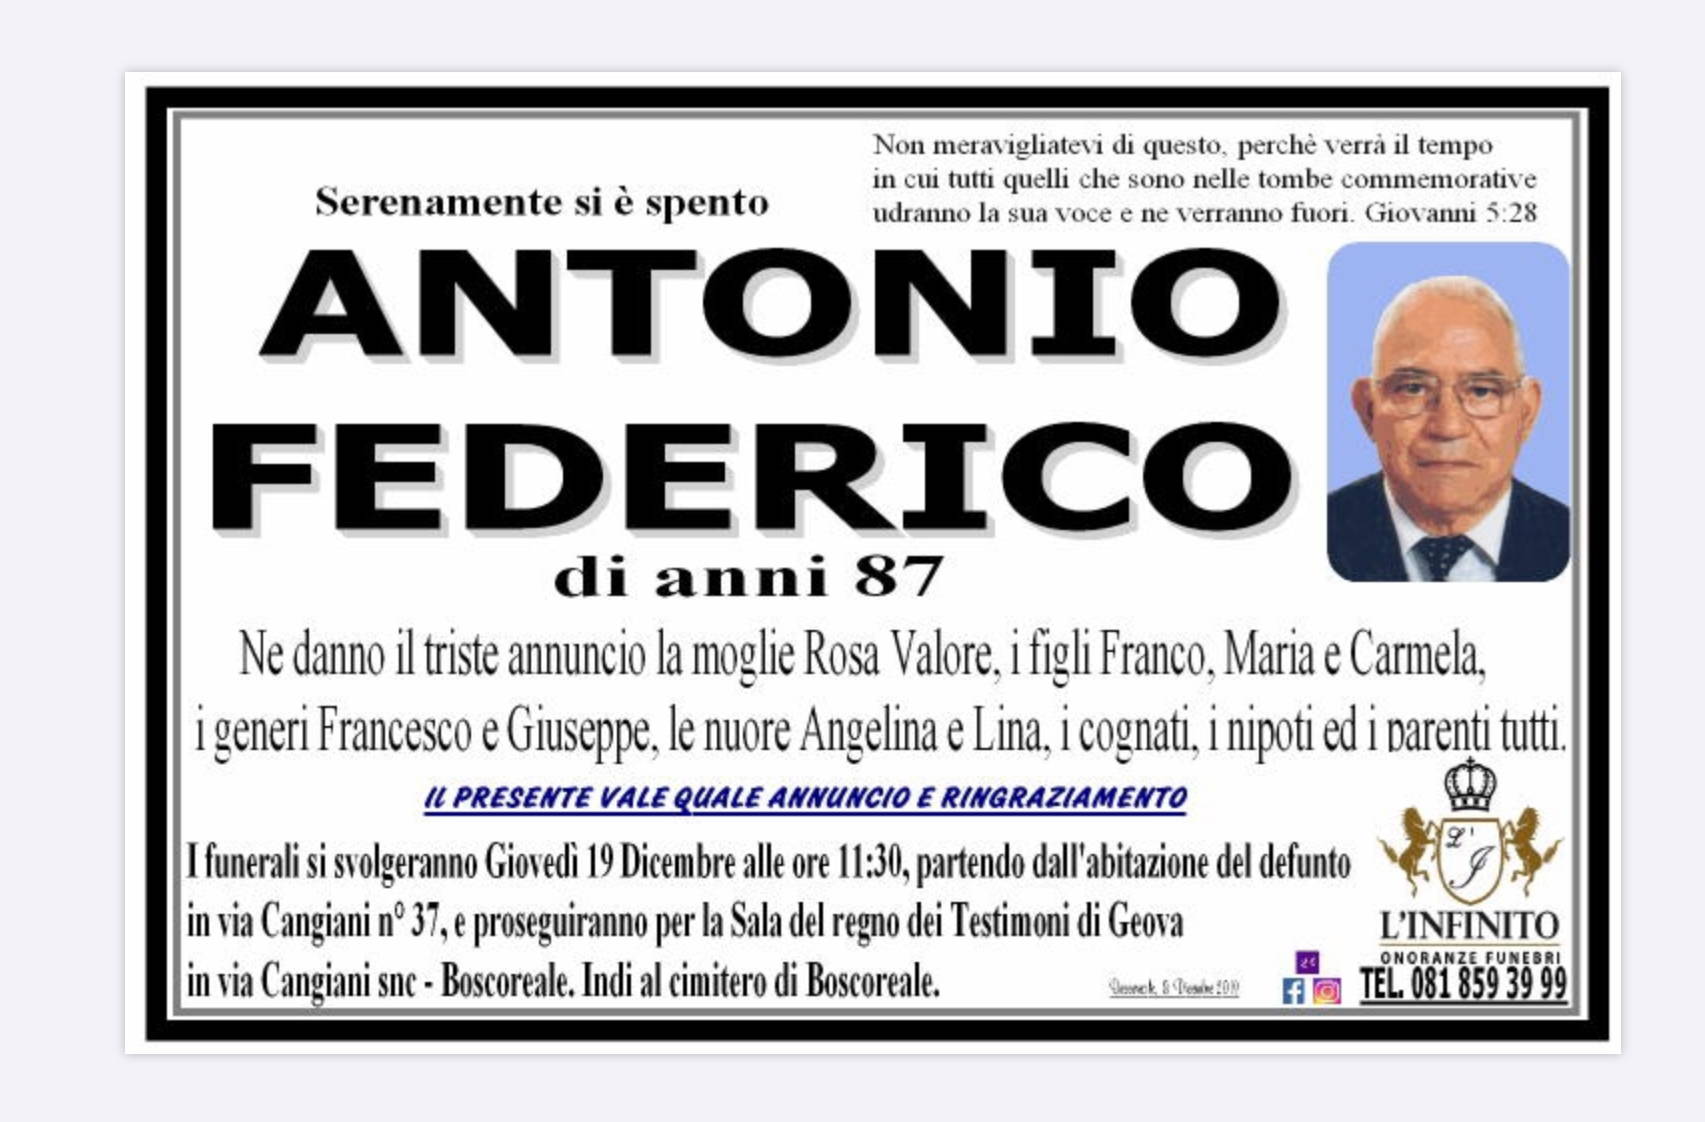 Antonio Federico